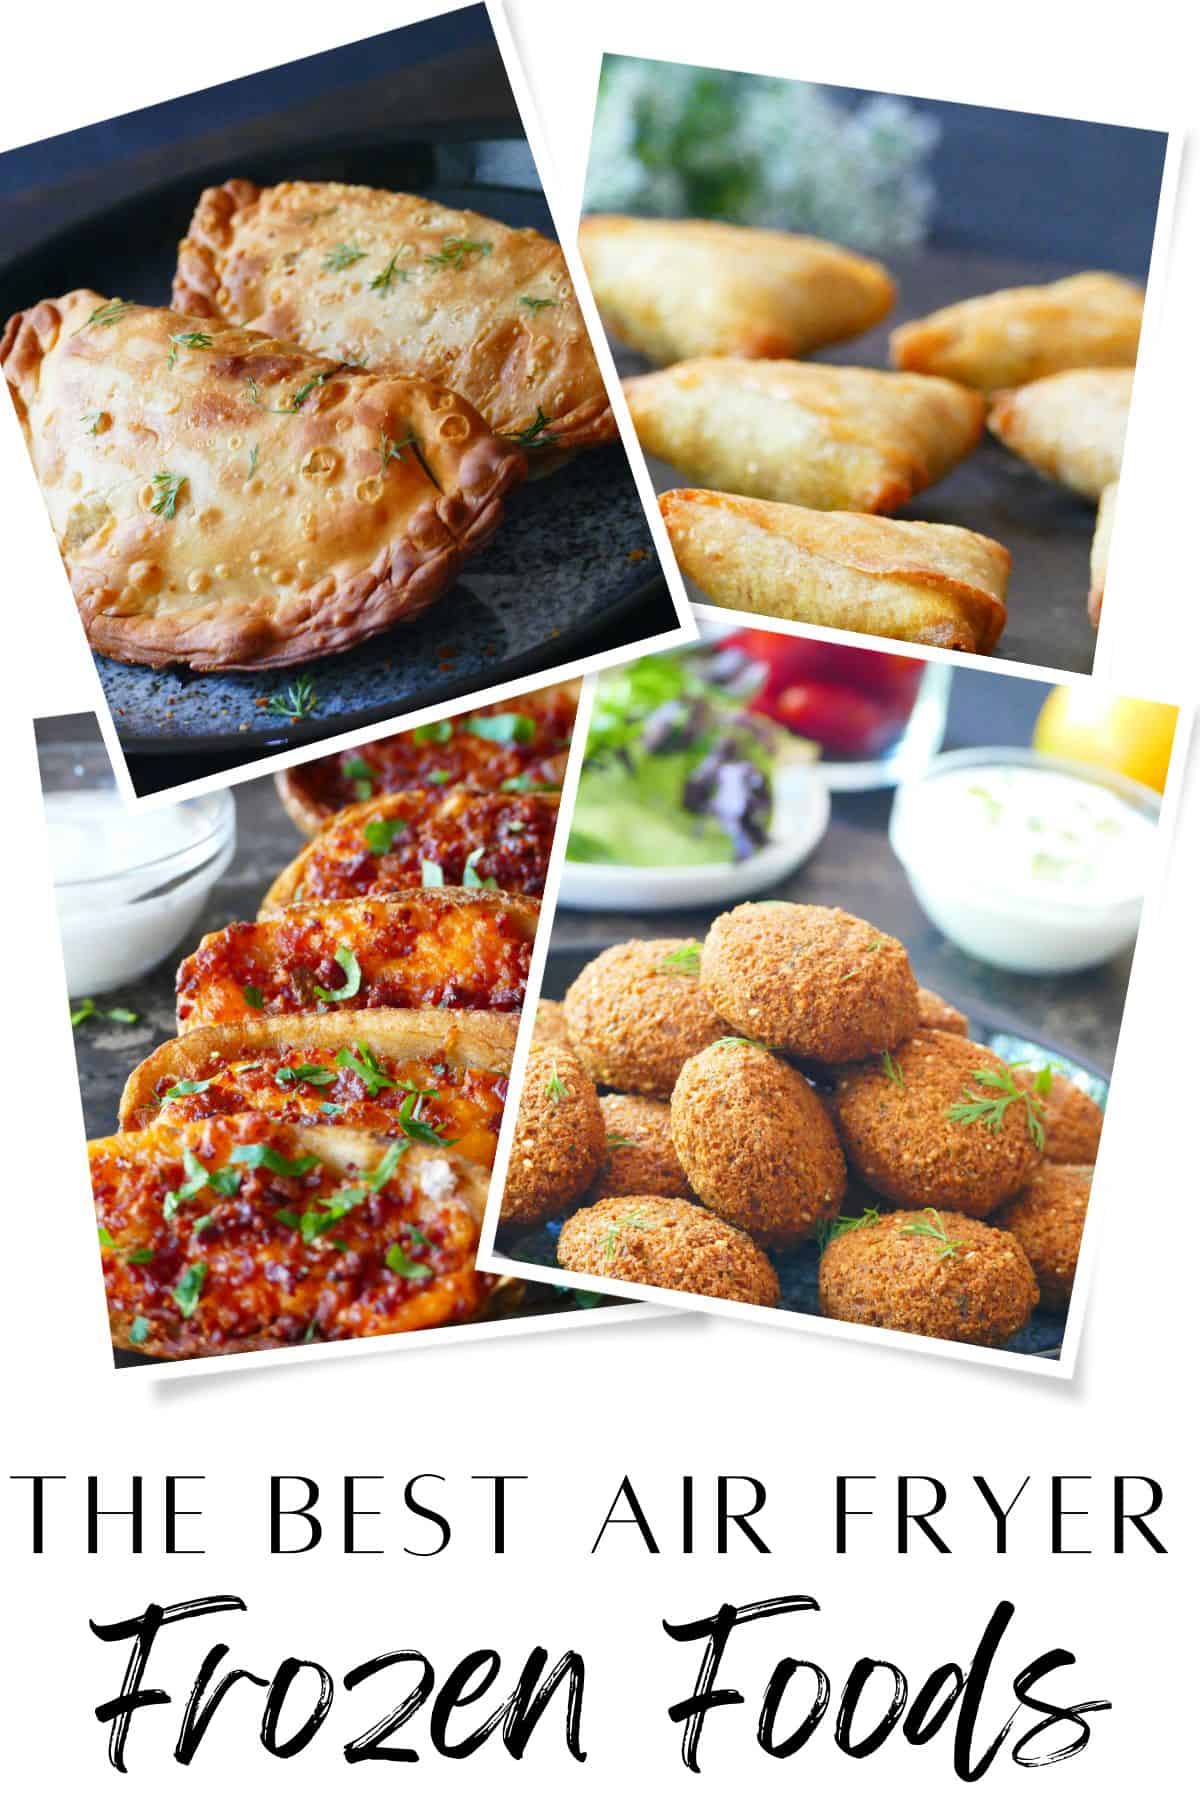 Air fryer frozen foods - Four images of frozen foods cooked - the best air fryer frozen foods